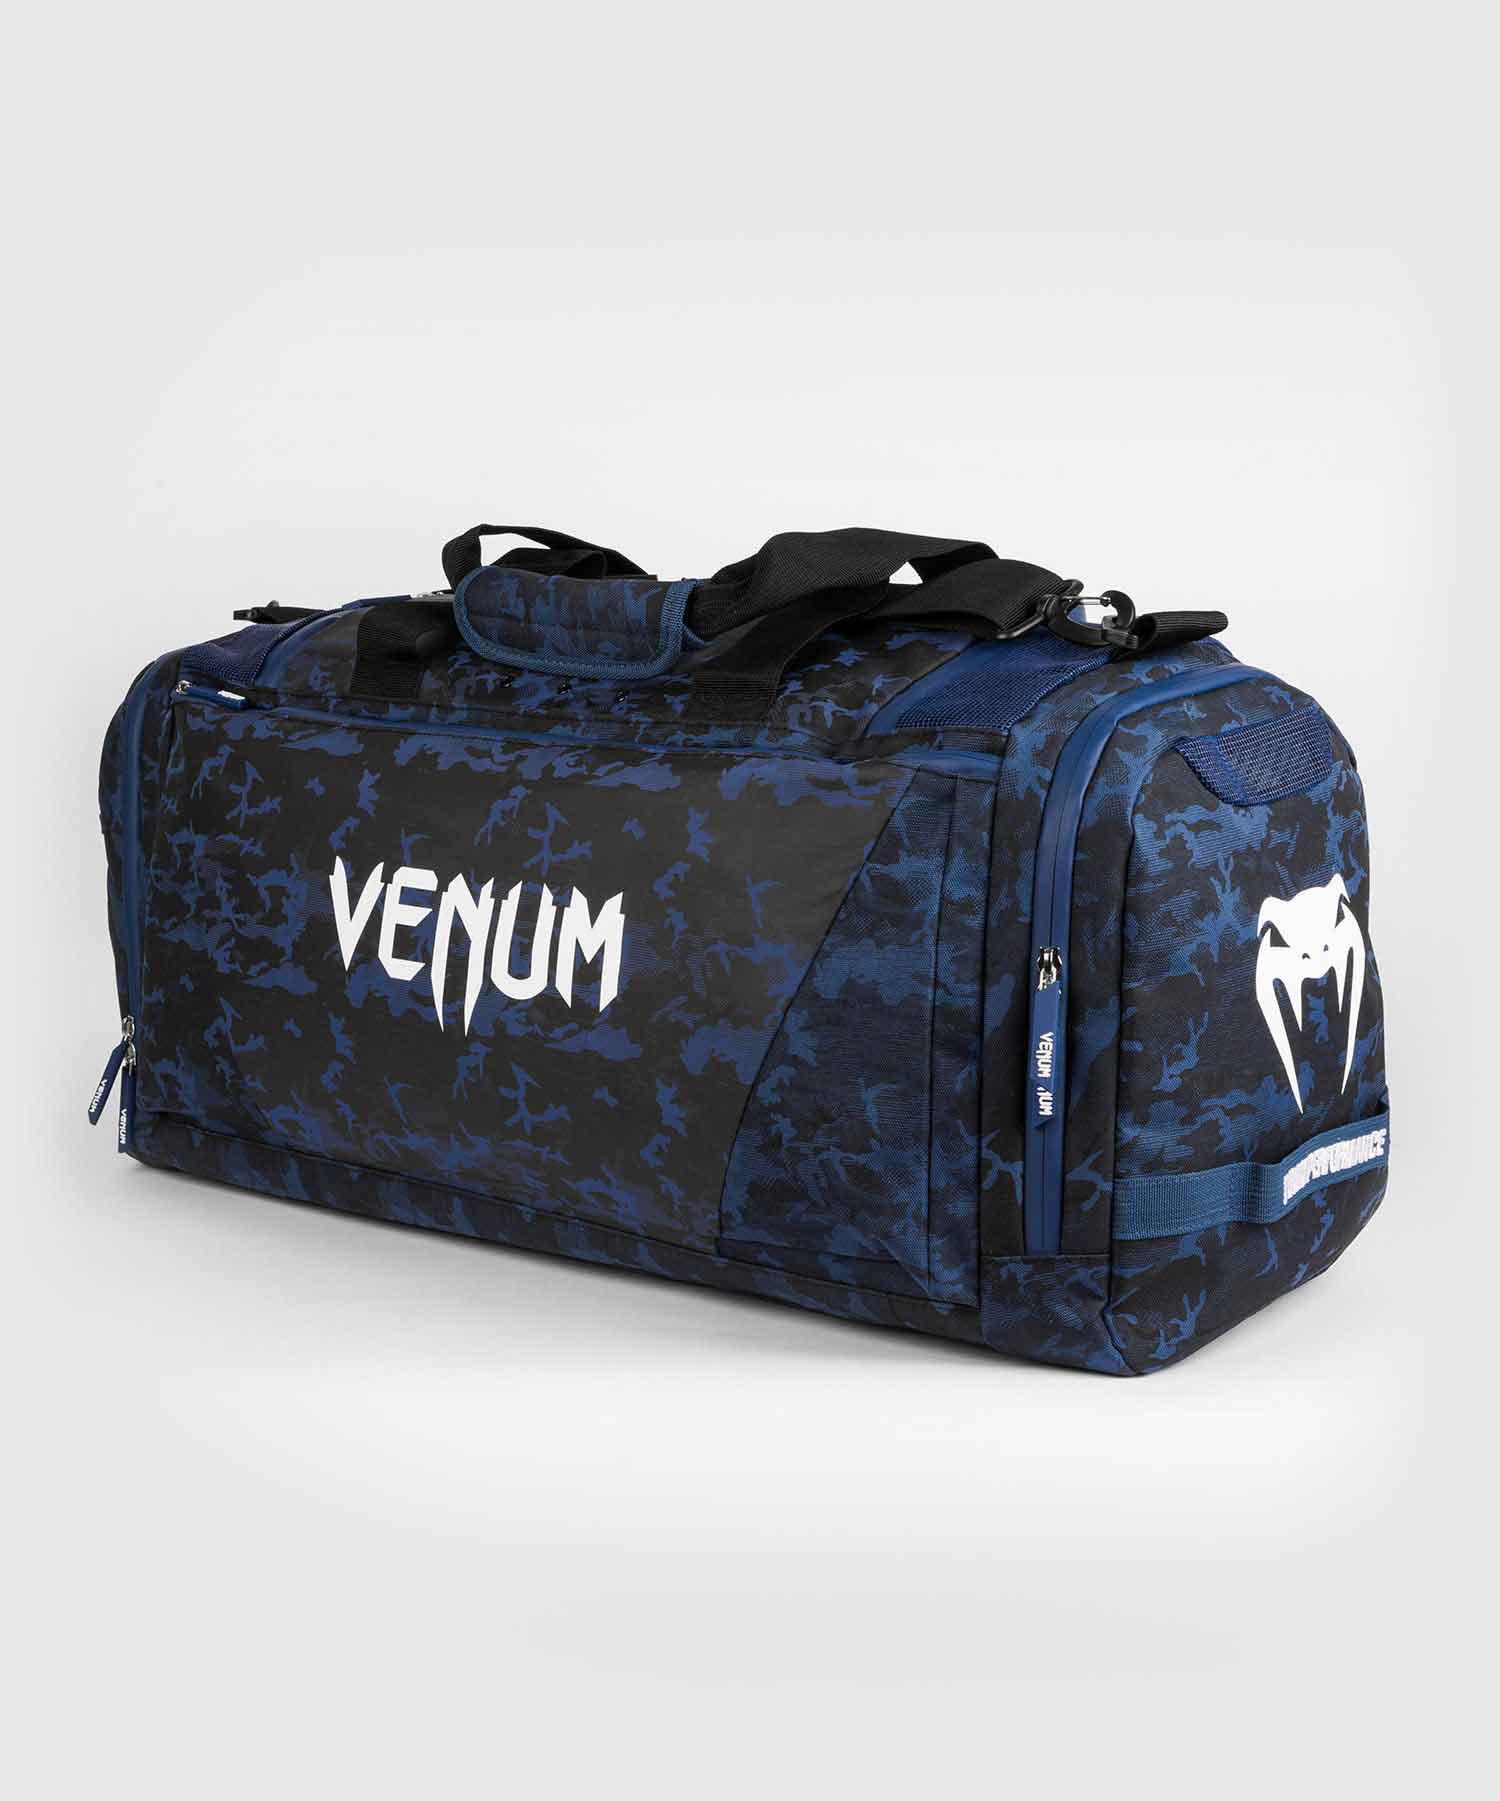 VENUM／ヴェナム　バッグ・バックパック　　TRAINER LITE EVO SPORTS BAGS／トレーナー ライト エヴォ スポーツバッグ（ネイビーブルー／黒）